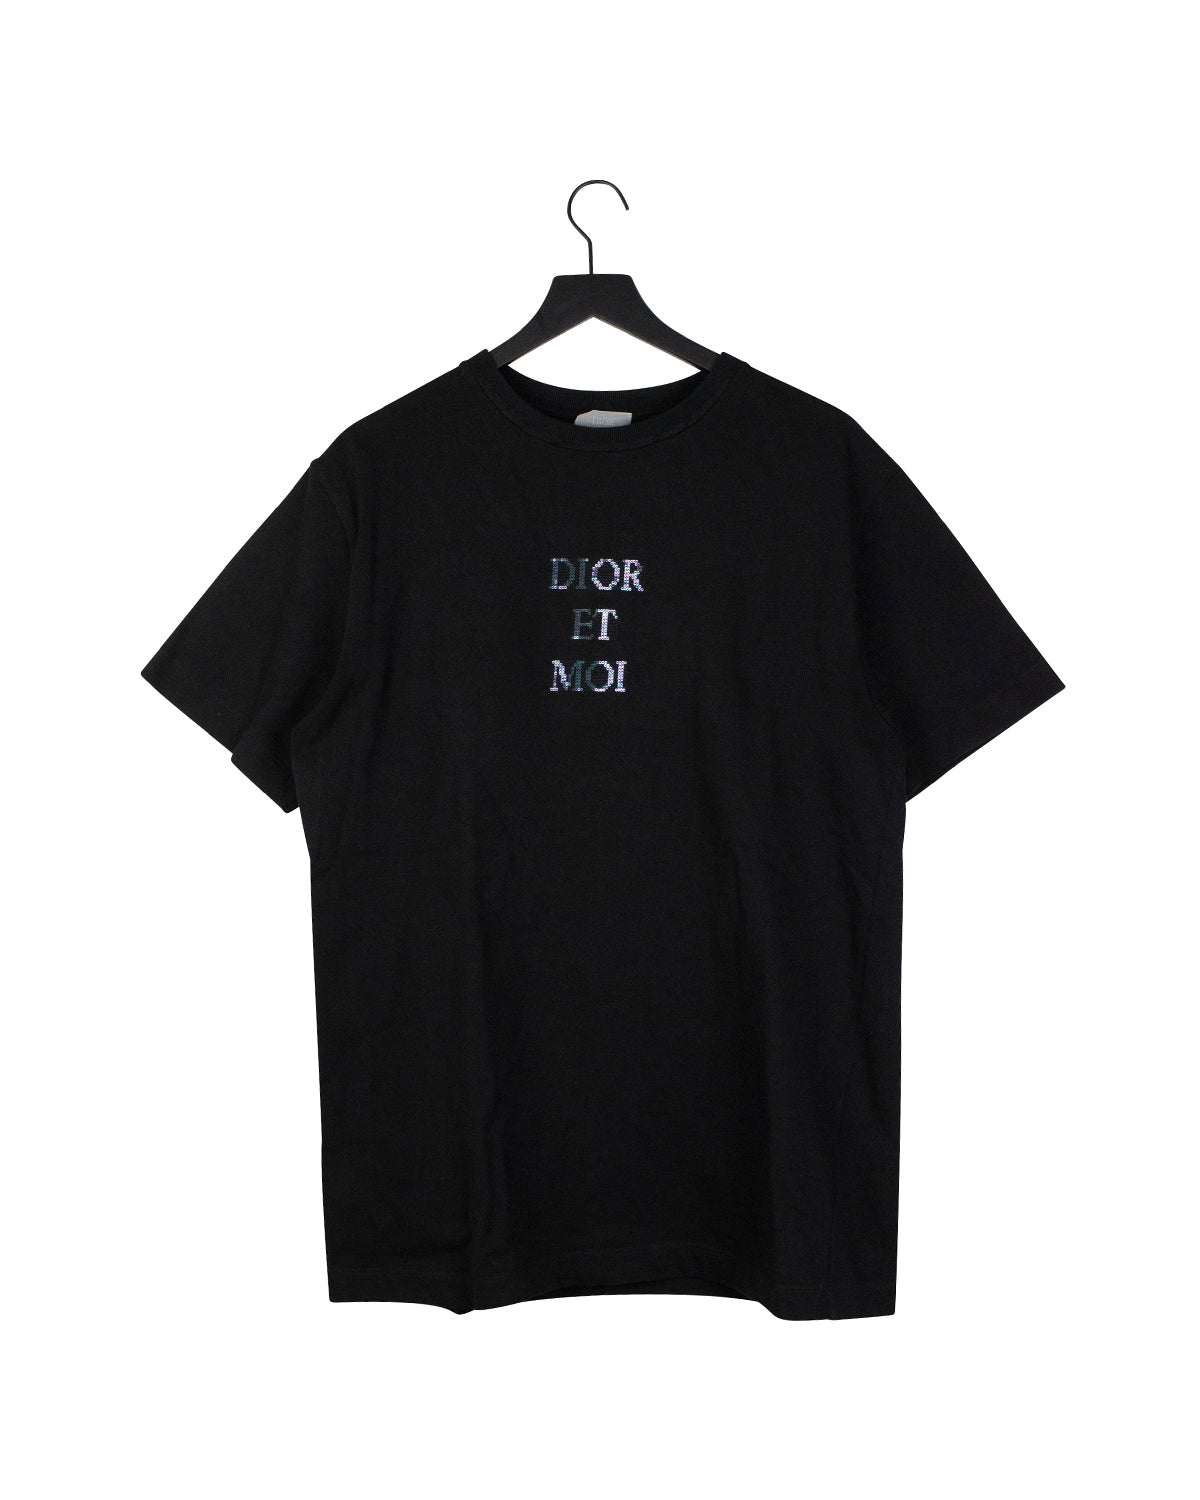 Dior et Moi Black T-Shirt  Size L – eightonethree.